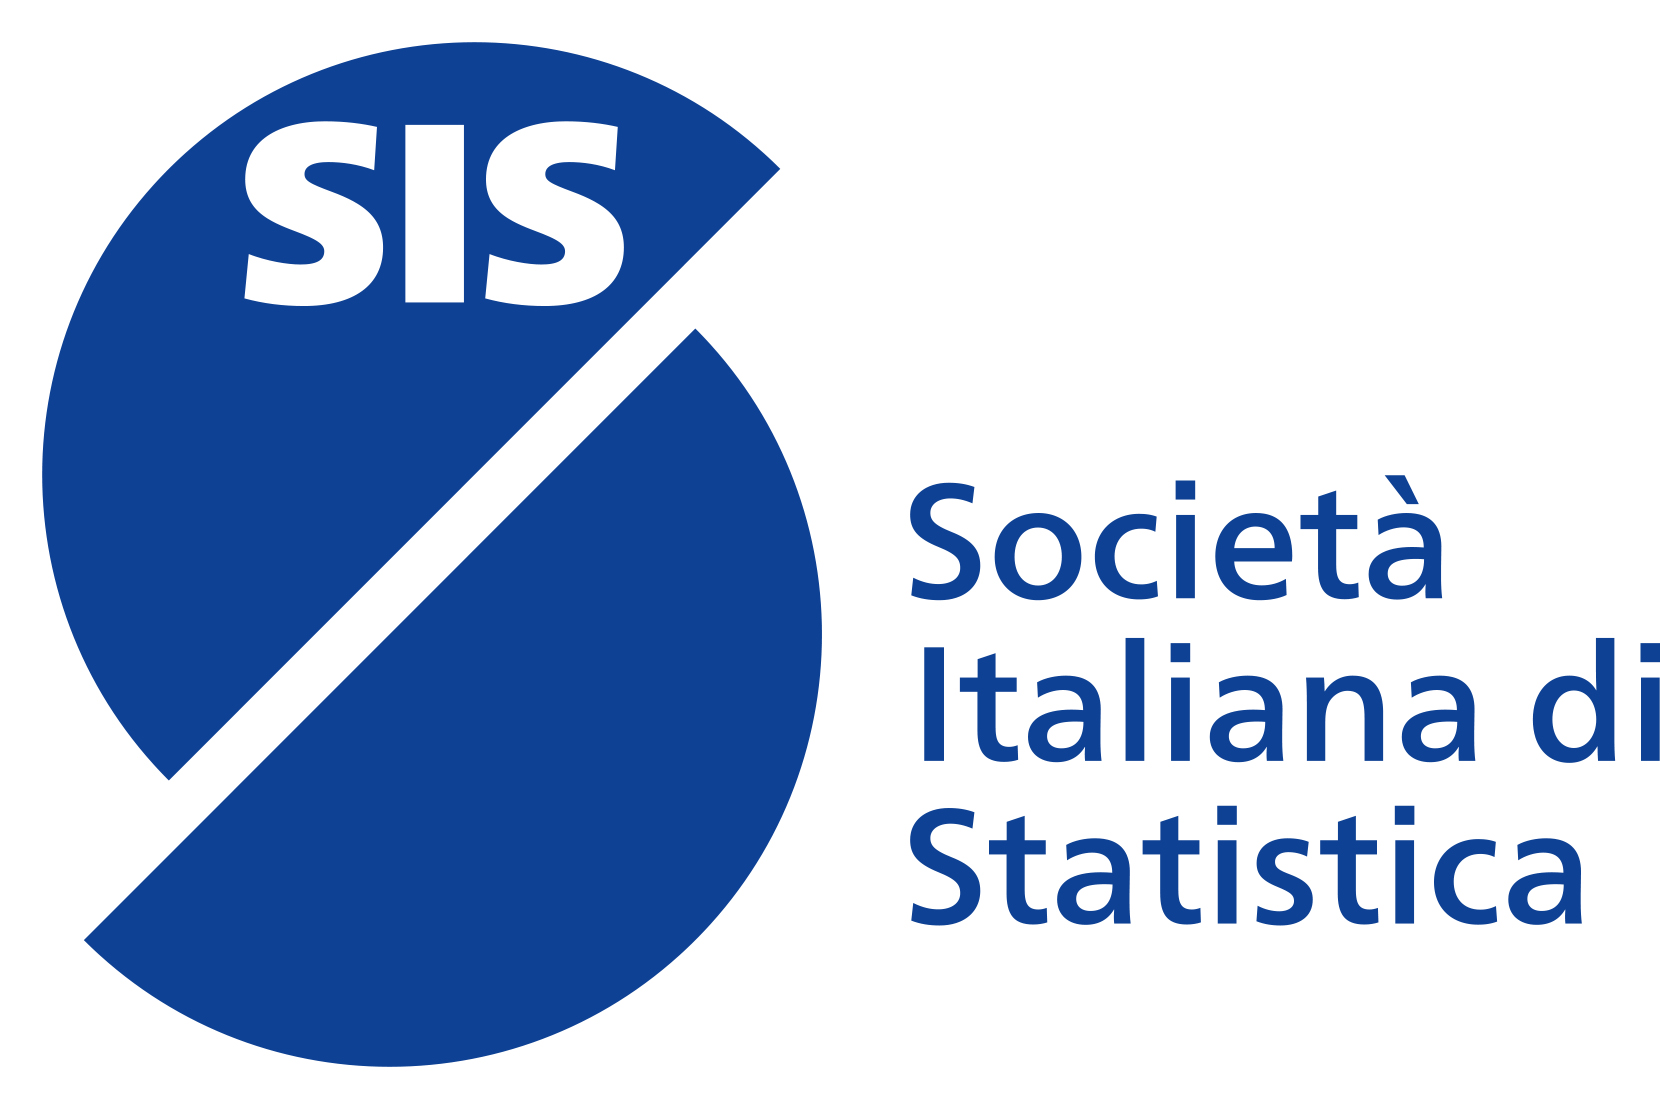 Italian Society of Statistics